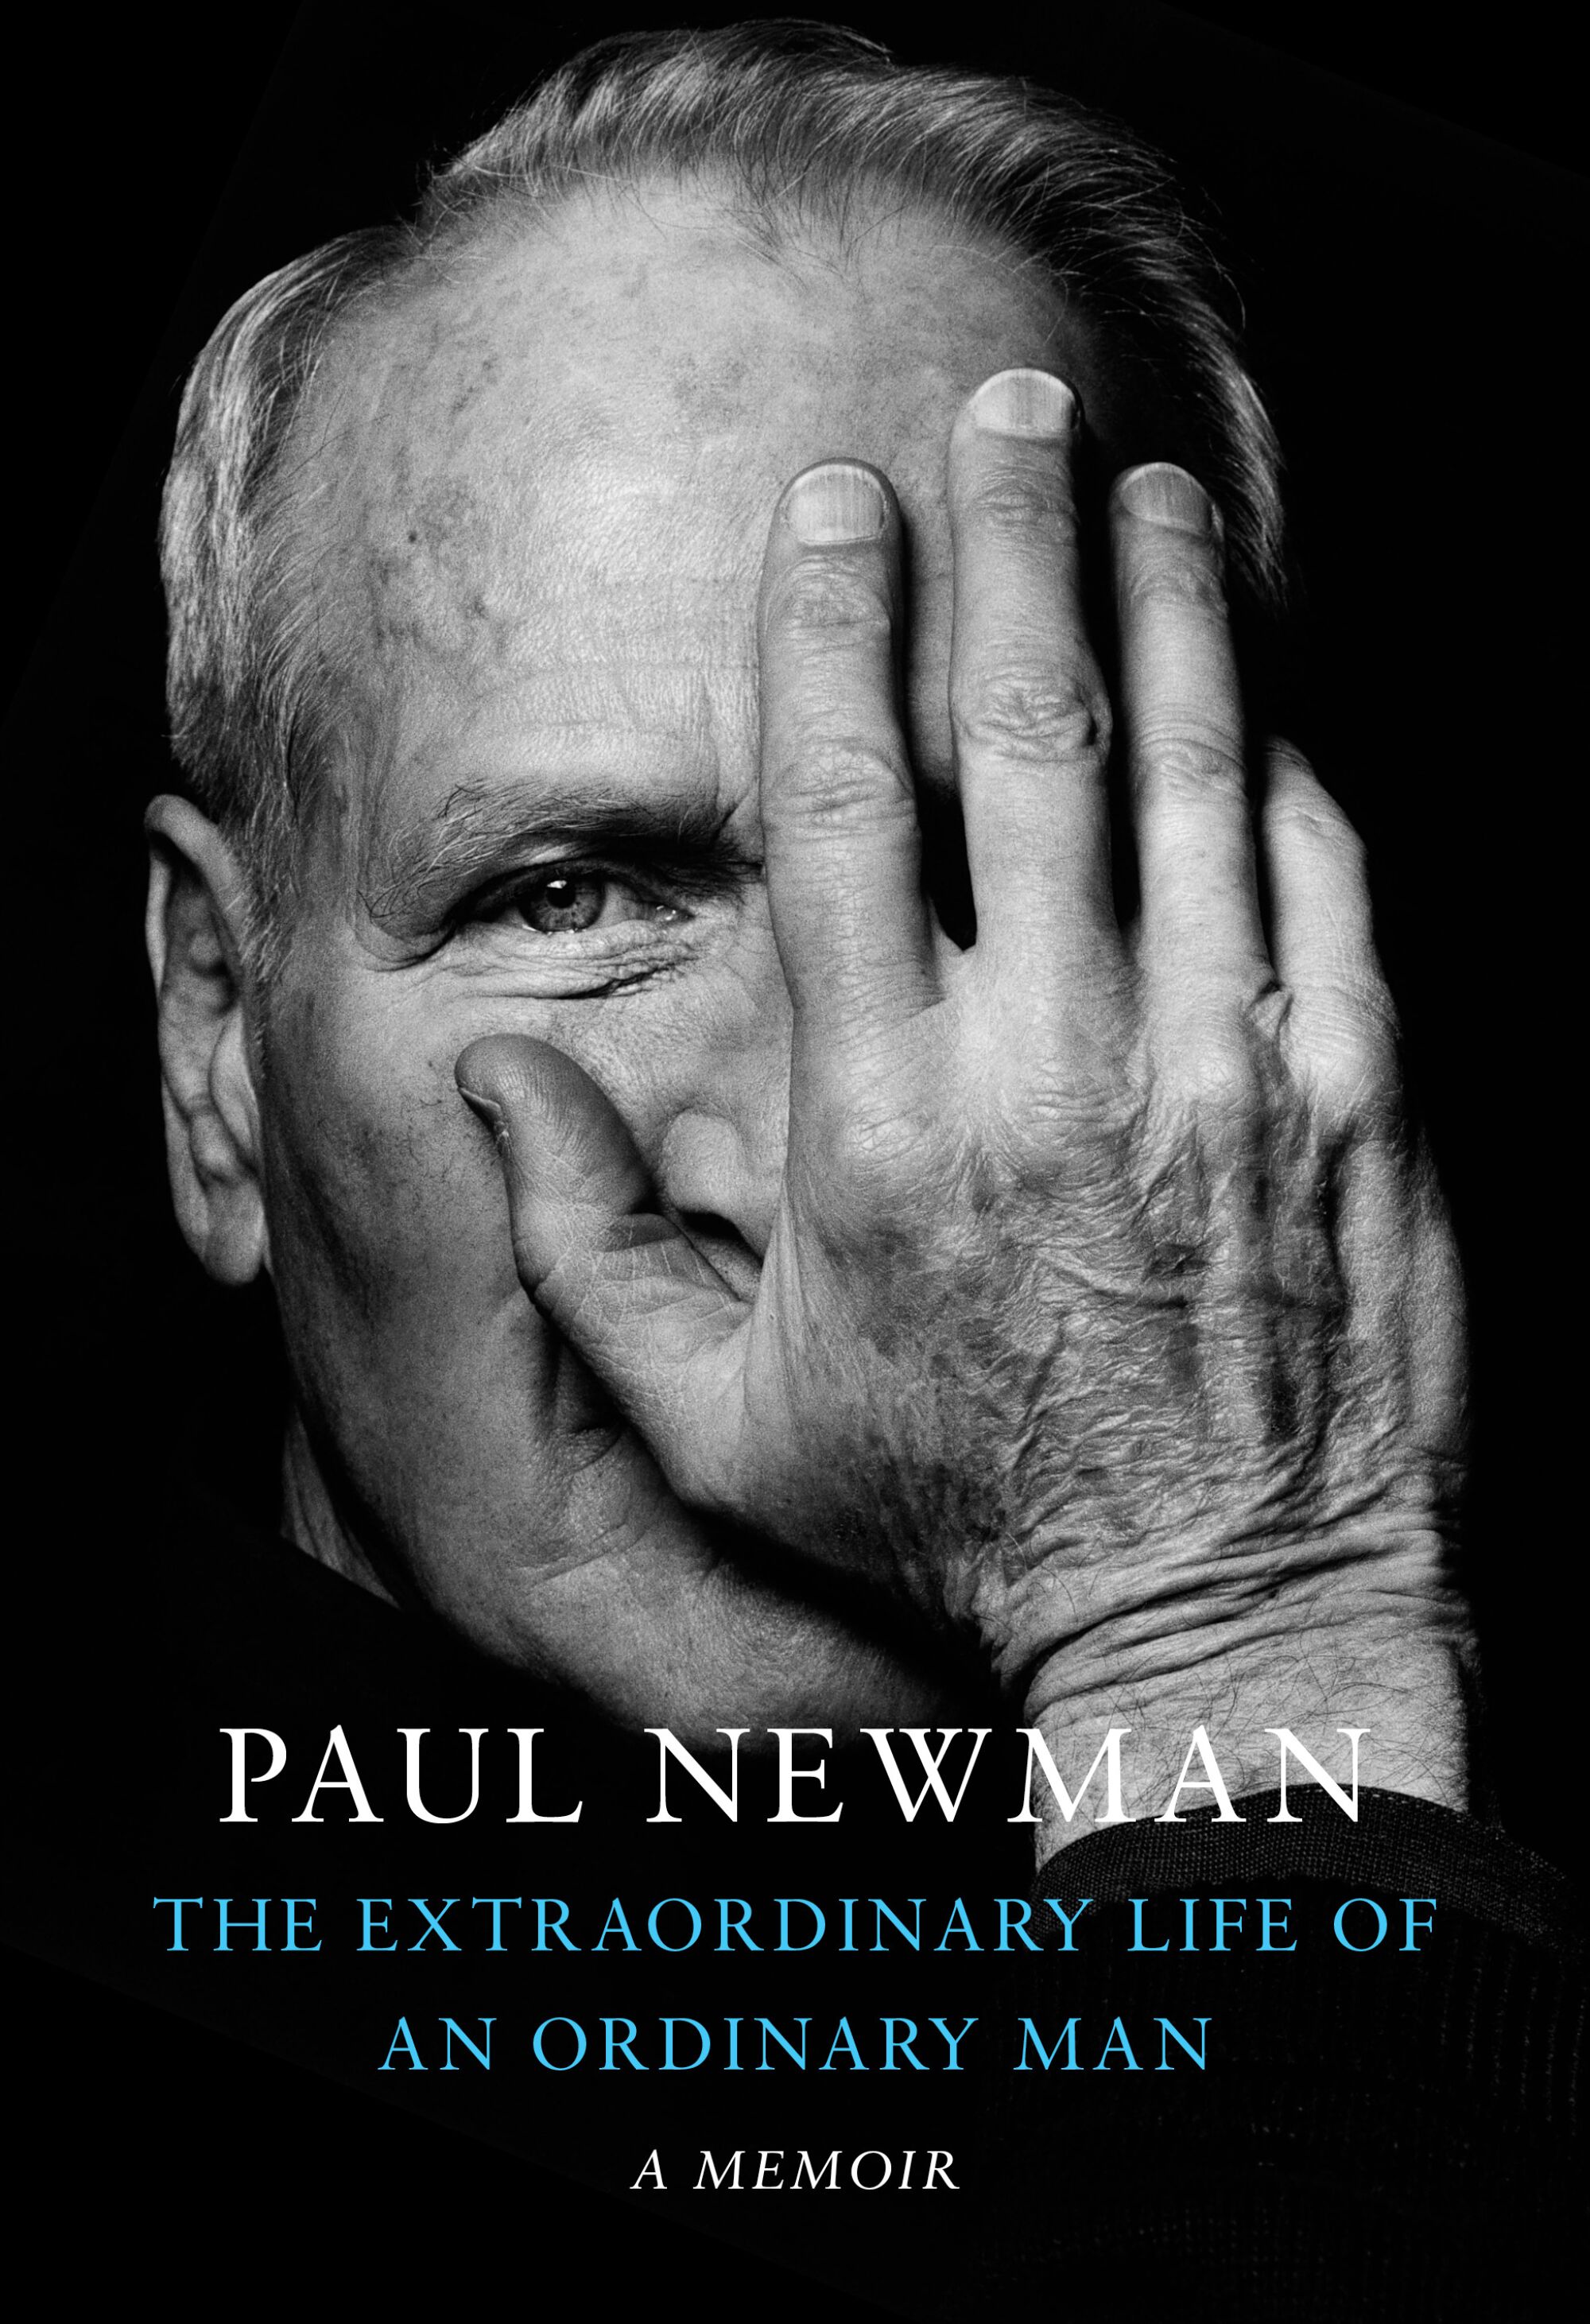 "The Extraordinary Life of an Ordinary Man" by Paul Newman, ed. David Rosenthal